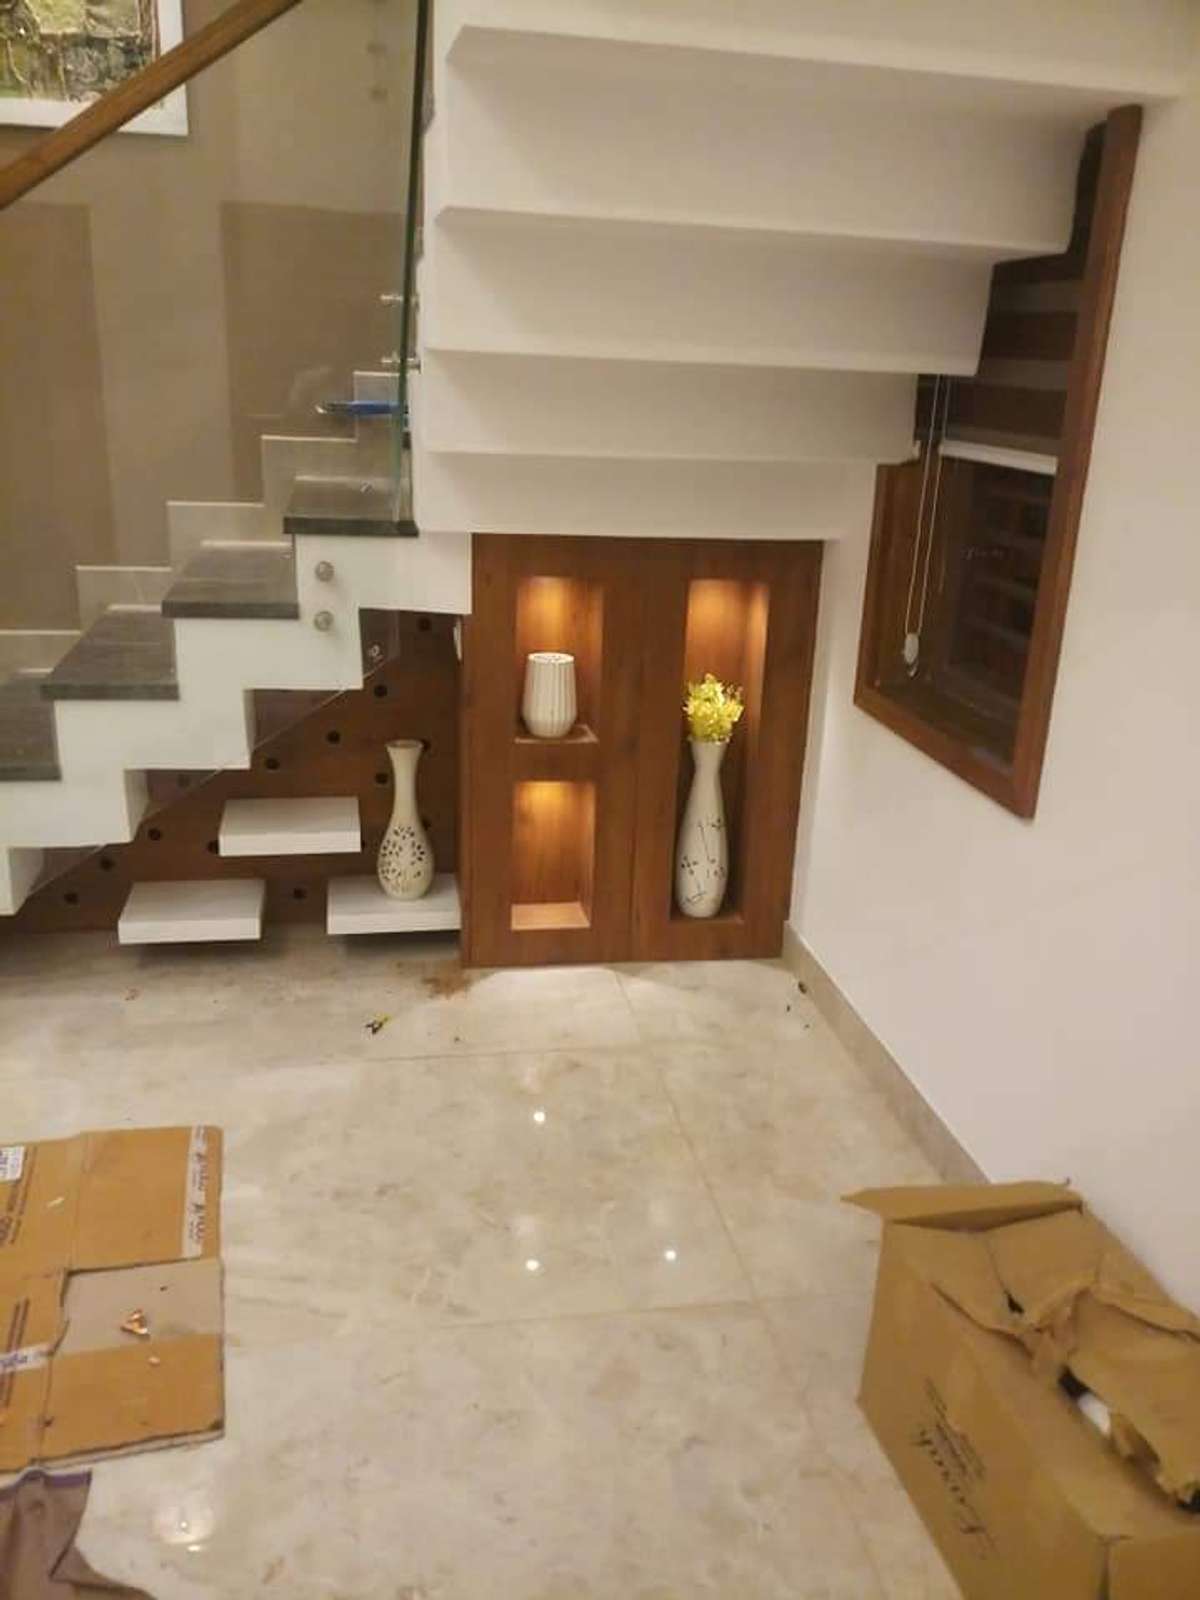 Flooring, Lighting, Storage, Staircase, Window Designs by Carpenter ЁЯЩП рдлреЙрд▓реЛ рдХрд░реЛ рджрд┐рд▓реНрд▓реА рдХрд╛рд░рдкреЗрдВрдЯрд░ рдХреЛ, Delhi | Kolo